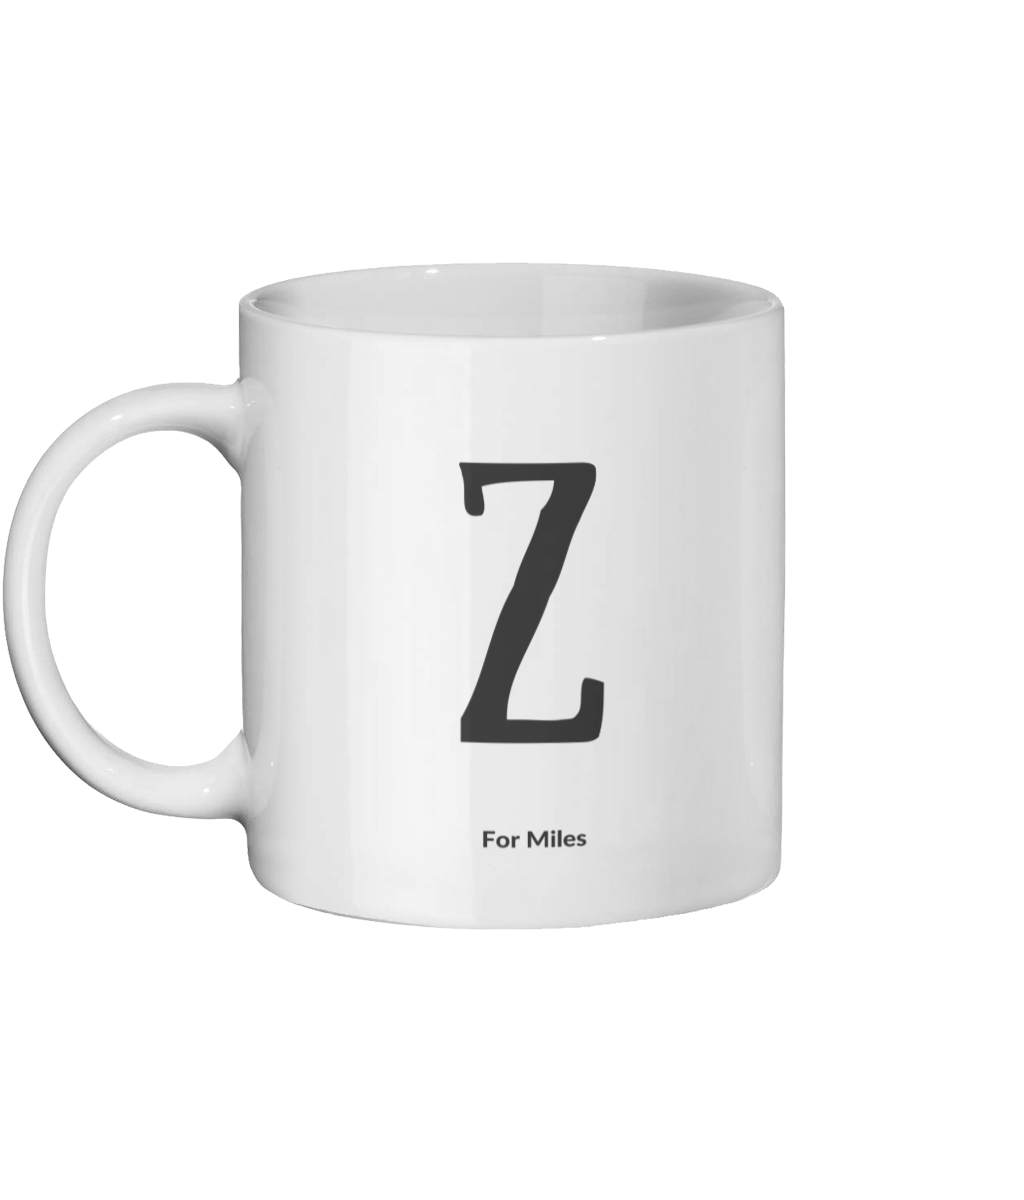 Z for Miles Mug Left-side